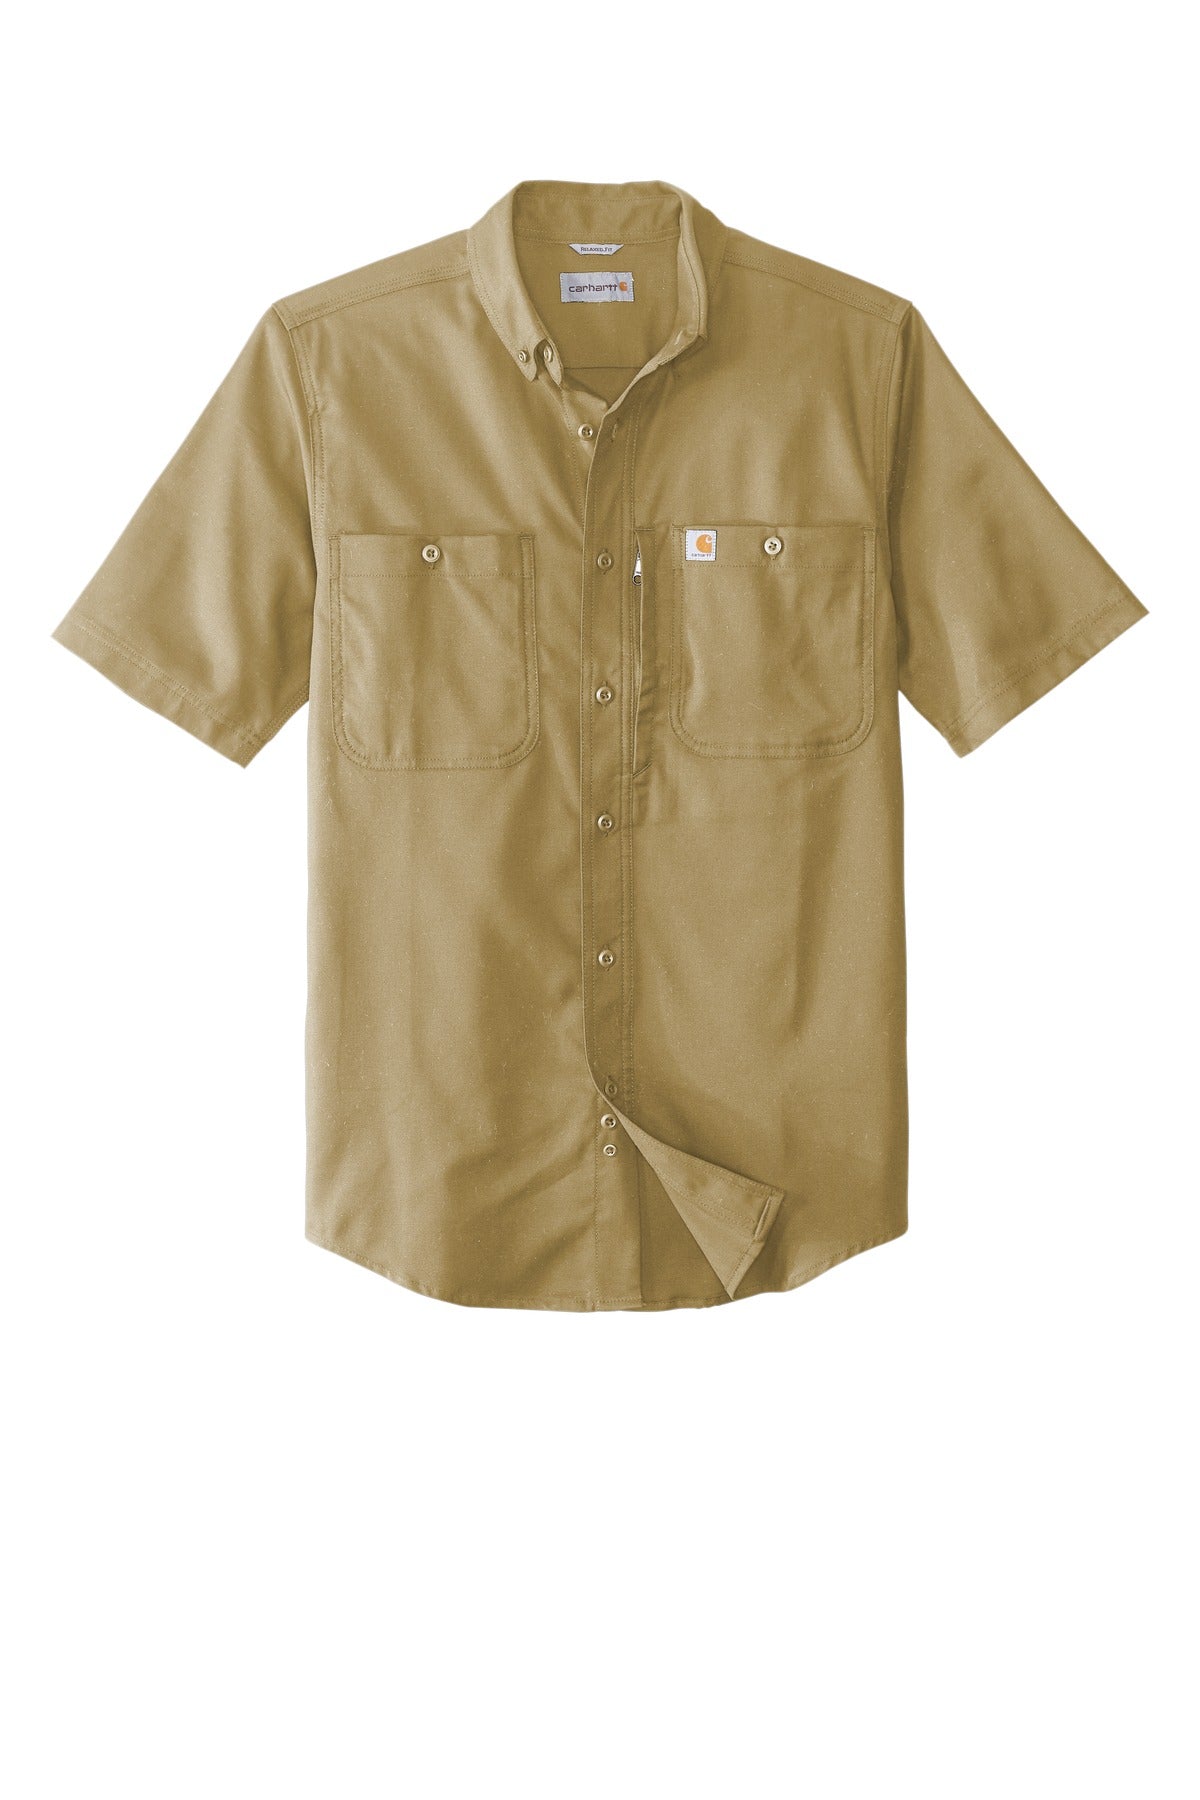 Carhartt Rugged Professional™Series Short Sleeve Shirt CT102537